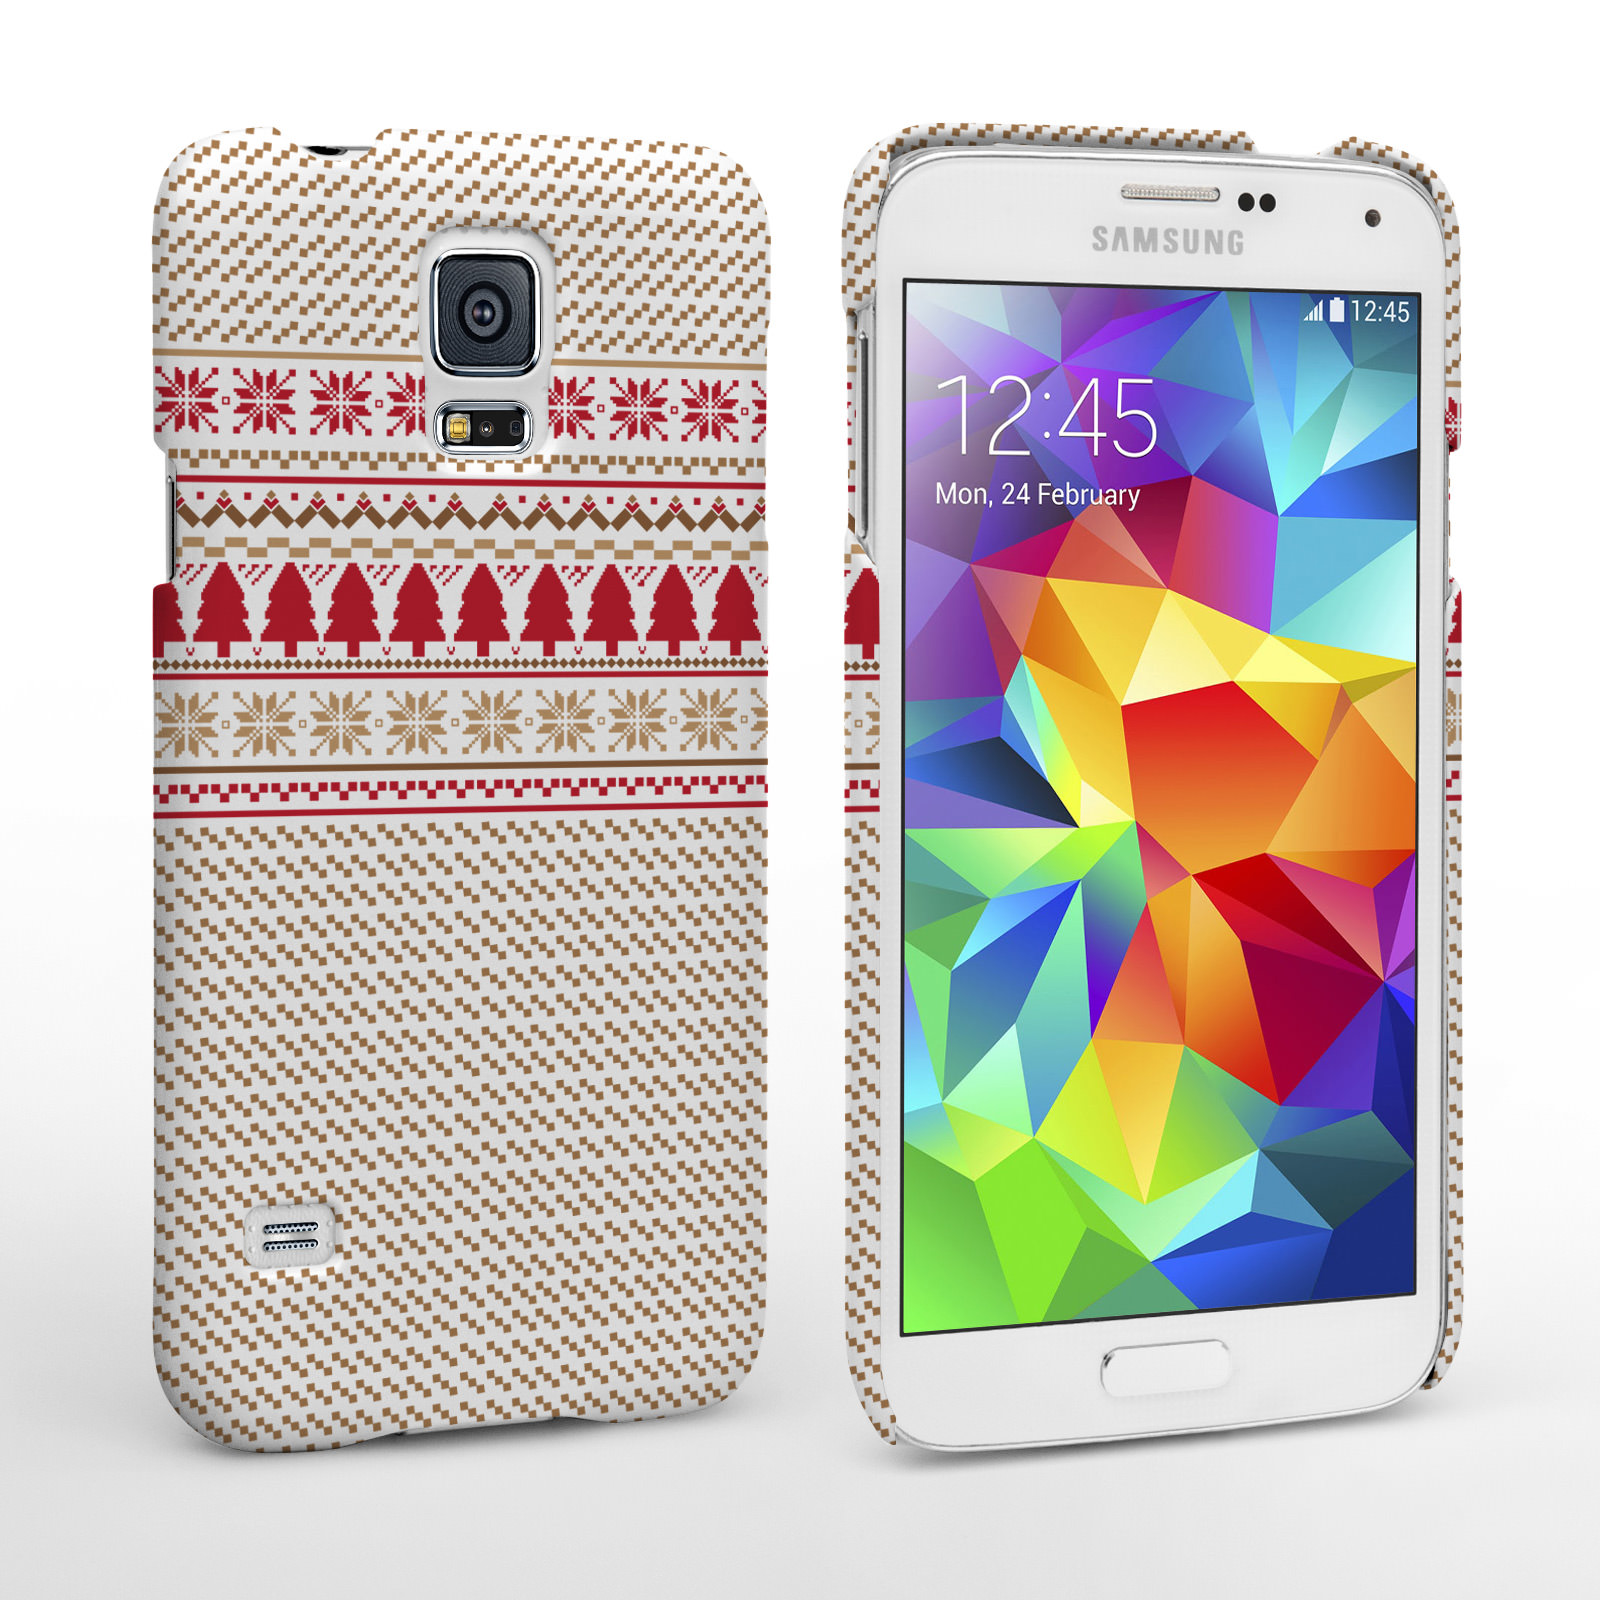 Caseflex Samsung Galaxy S5 Christmas Knitted Snowflake Jumper Hard Case Brown / Red / White